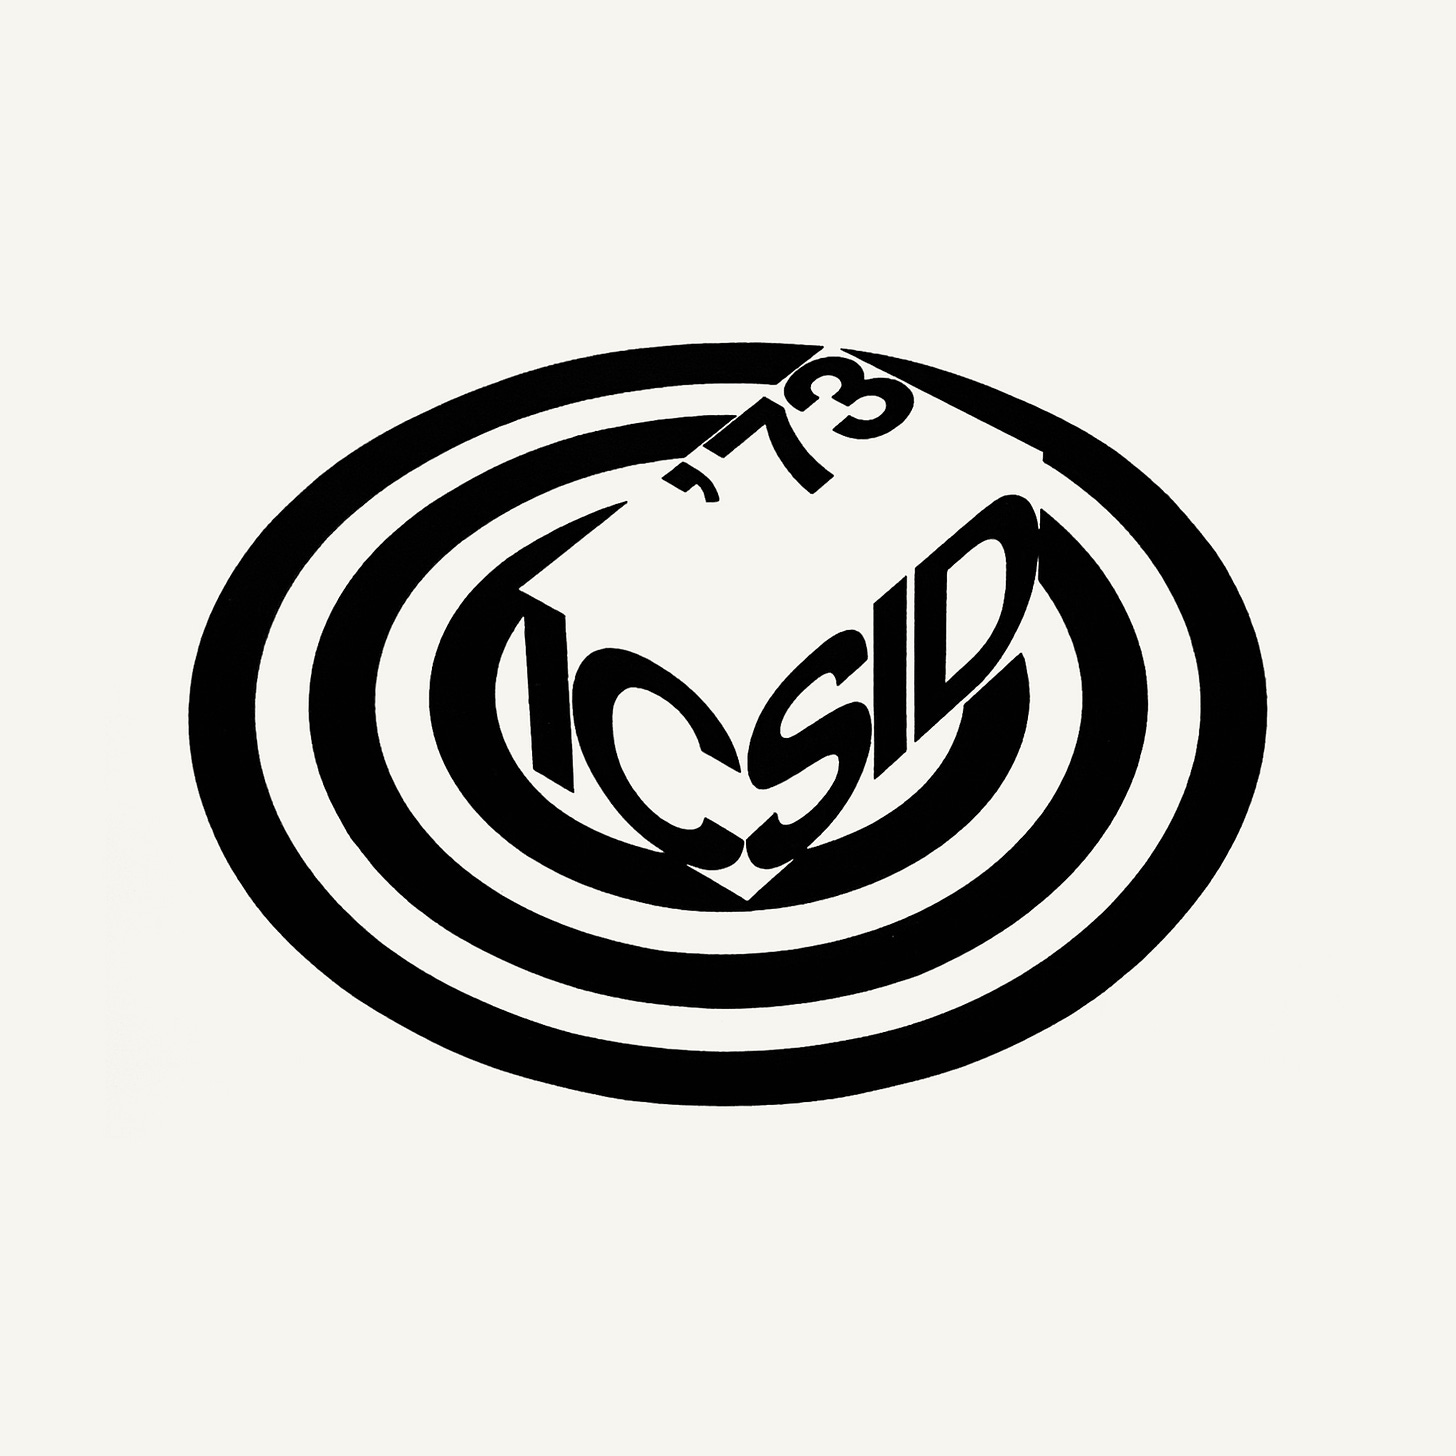 ICSID Logo Design by Yusaku Kamekura, 1970, Japan